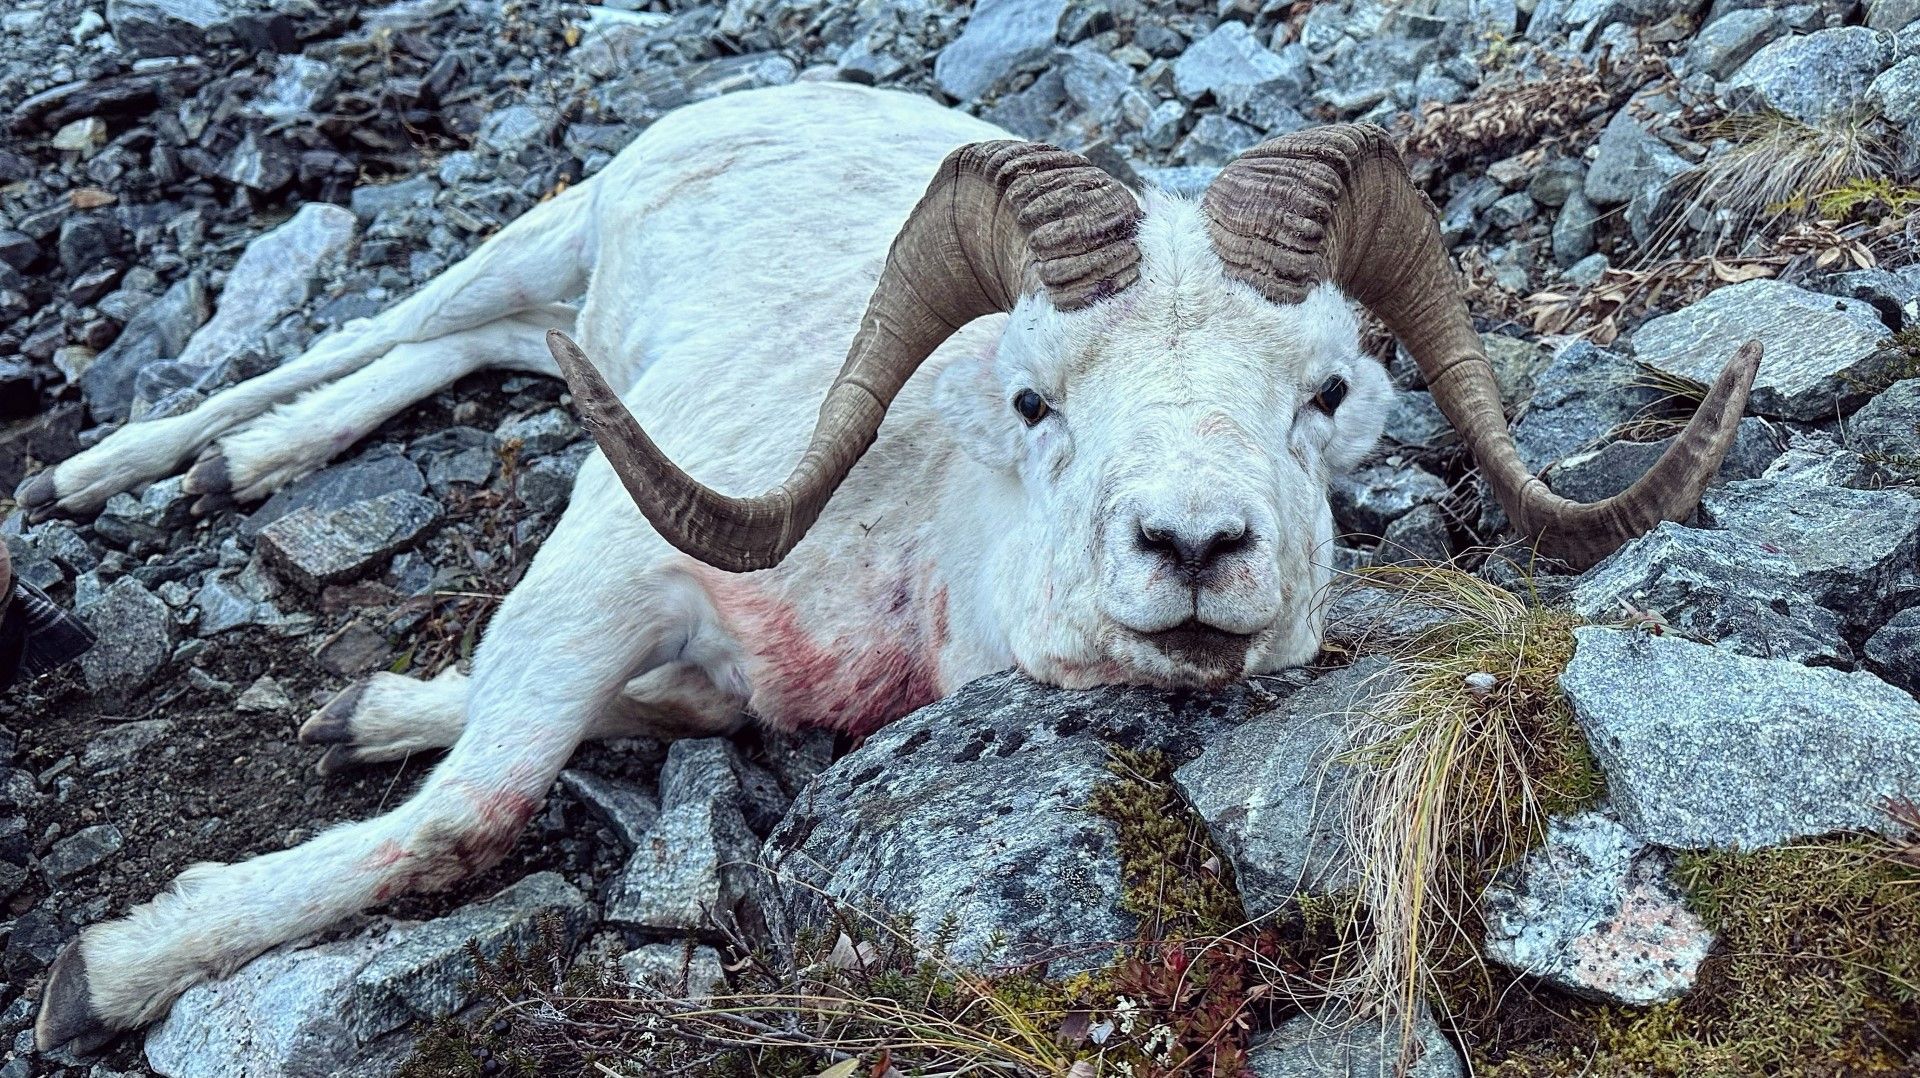 Alaska Sheep hunting Outfitter, Alaska Sheep Hunting Guide